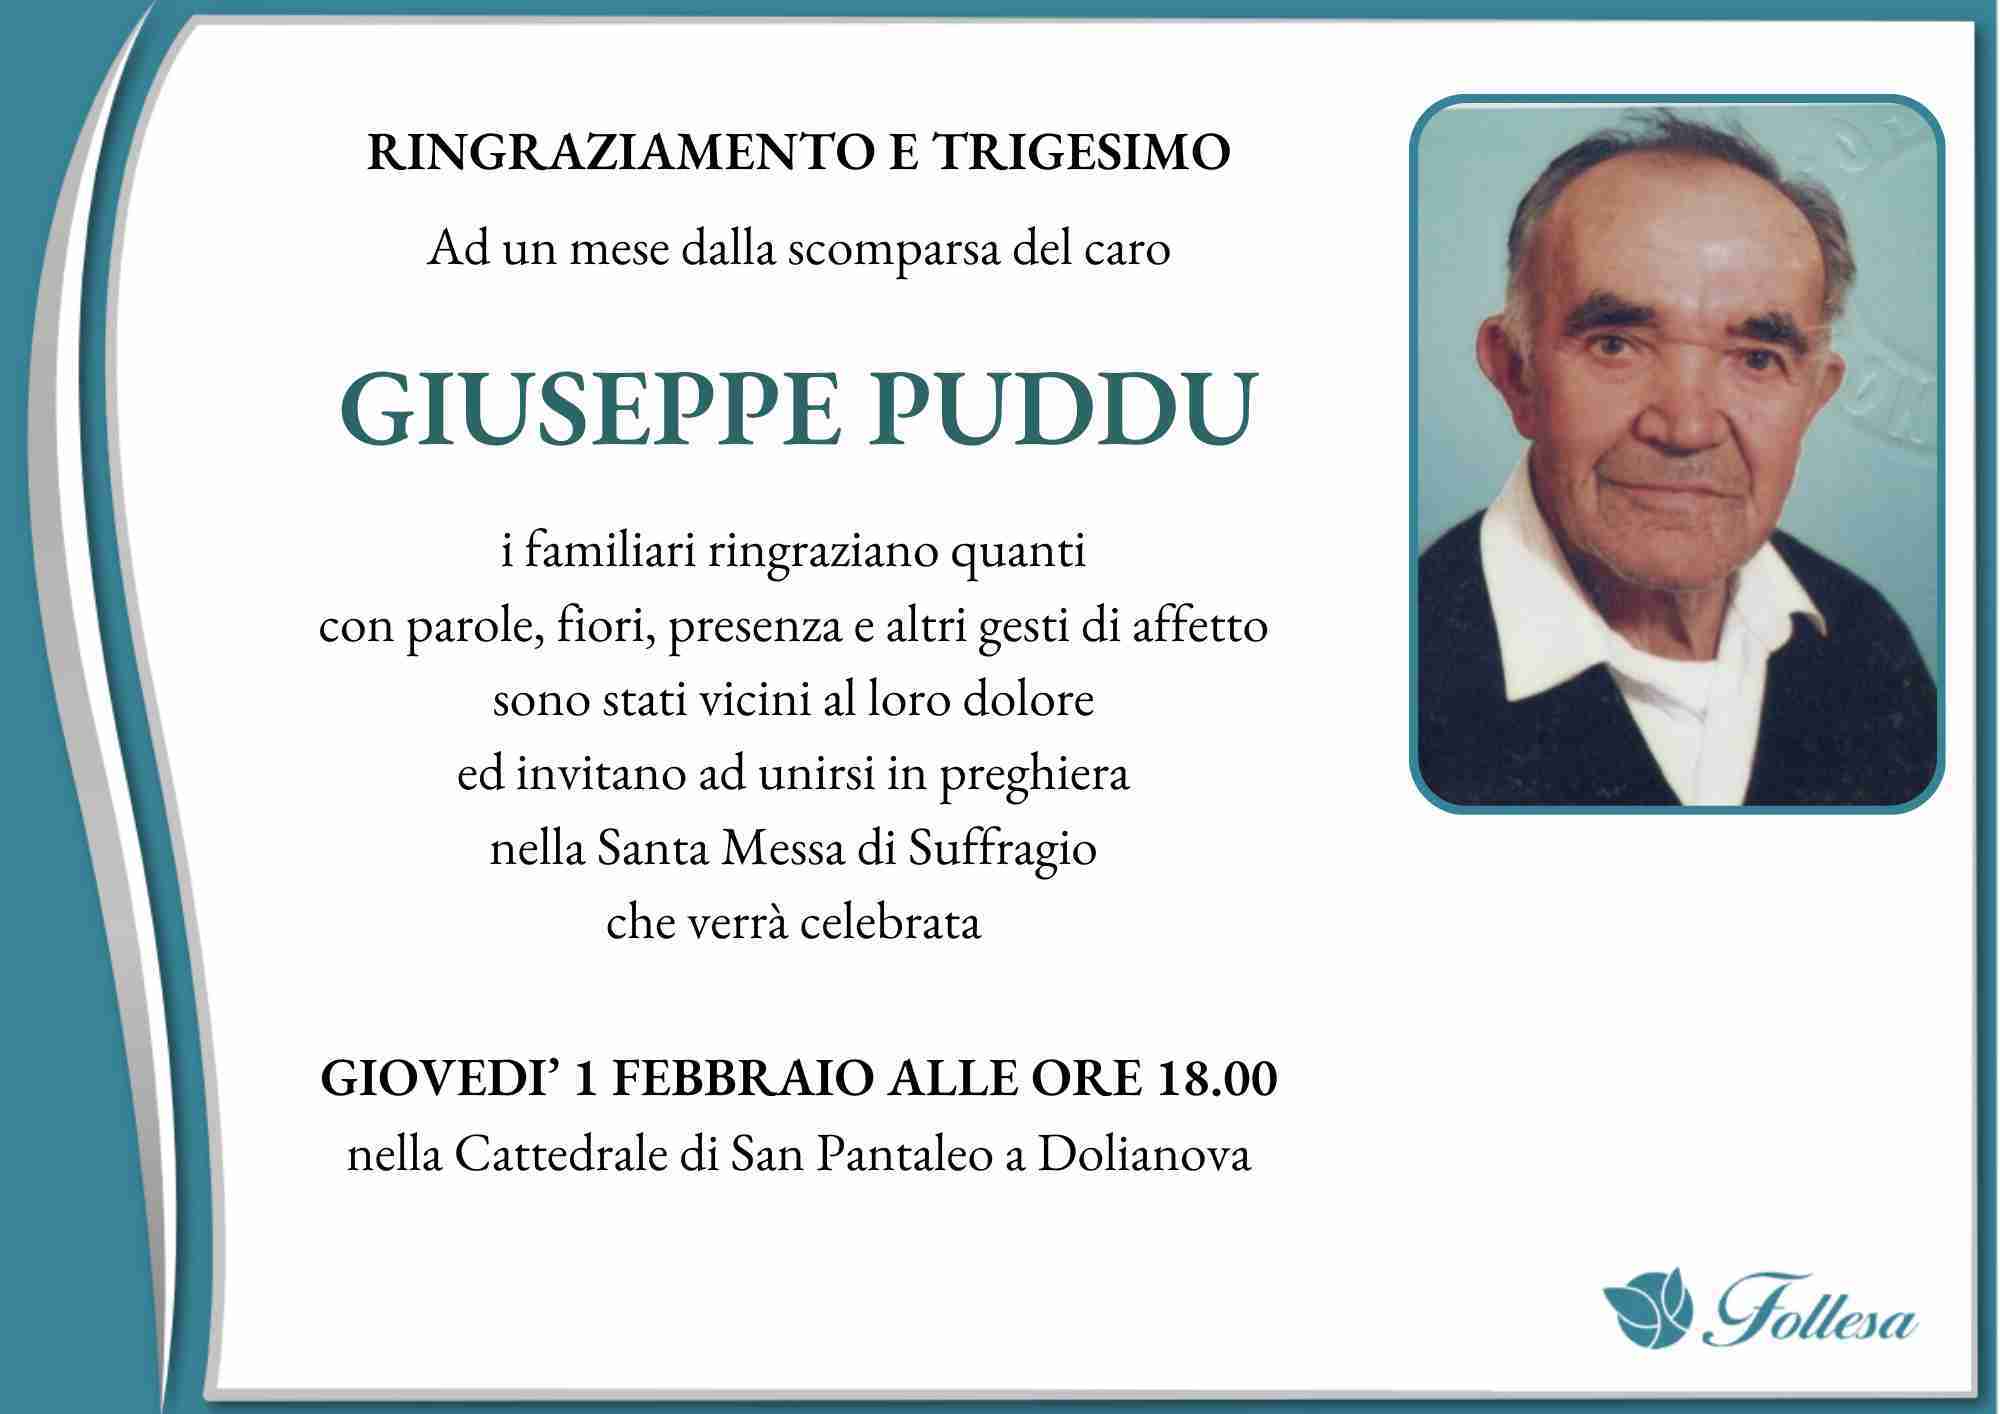 Giuseppe Puddu